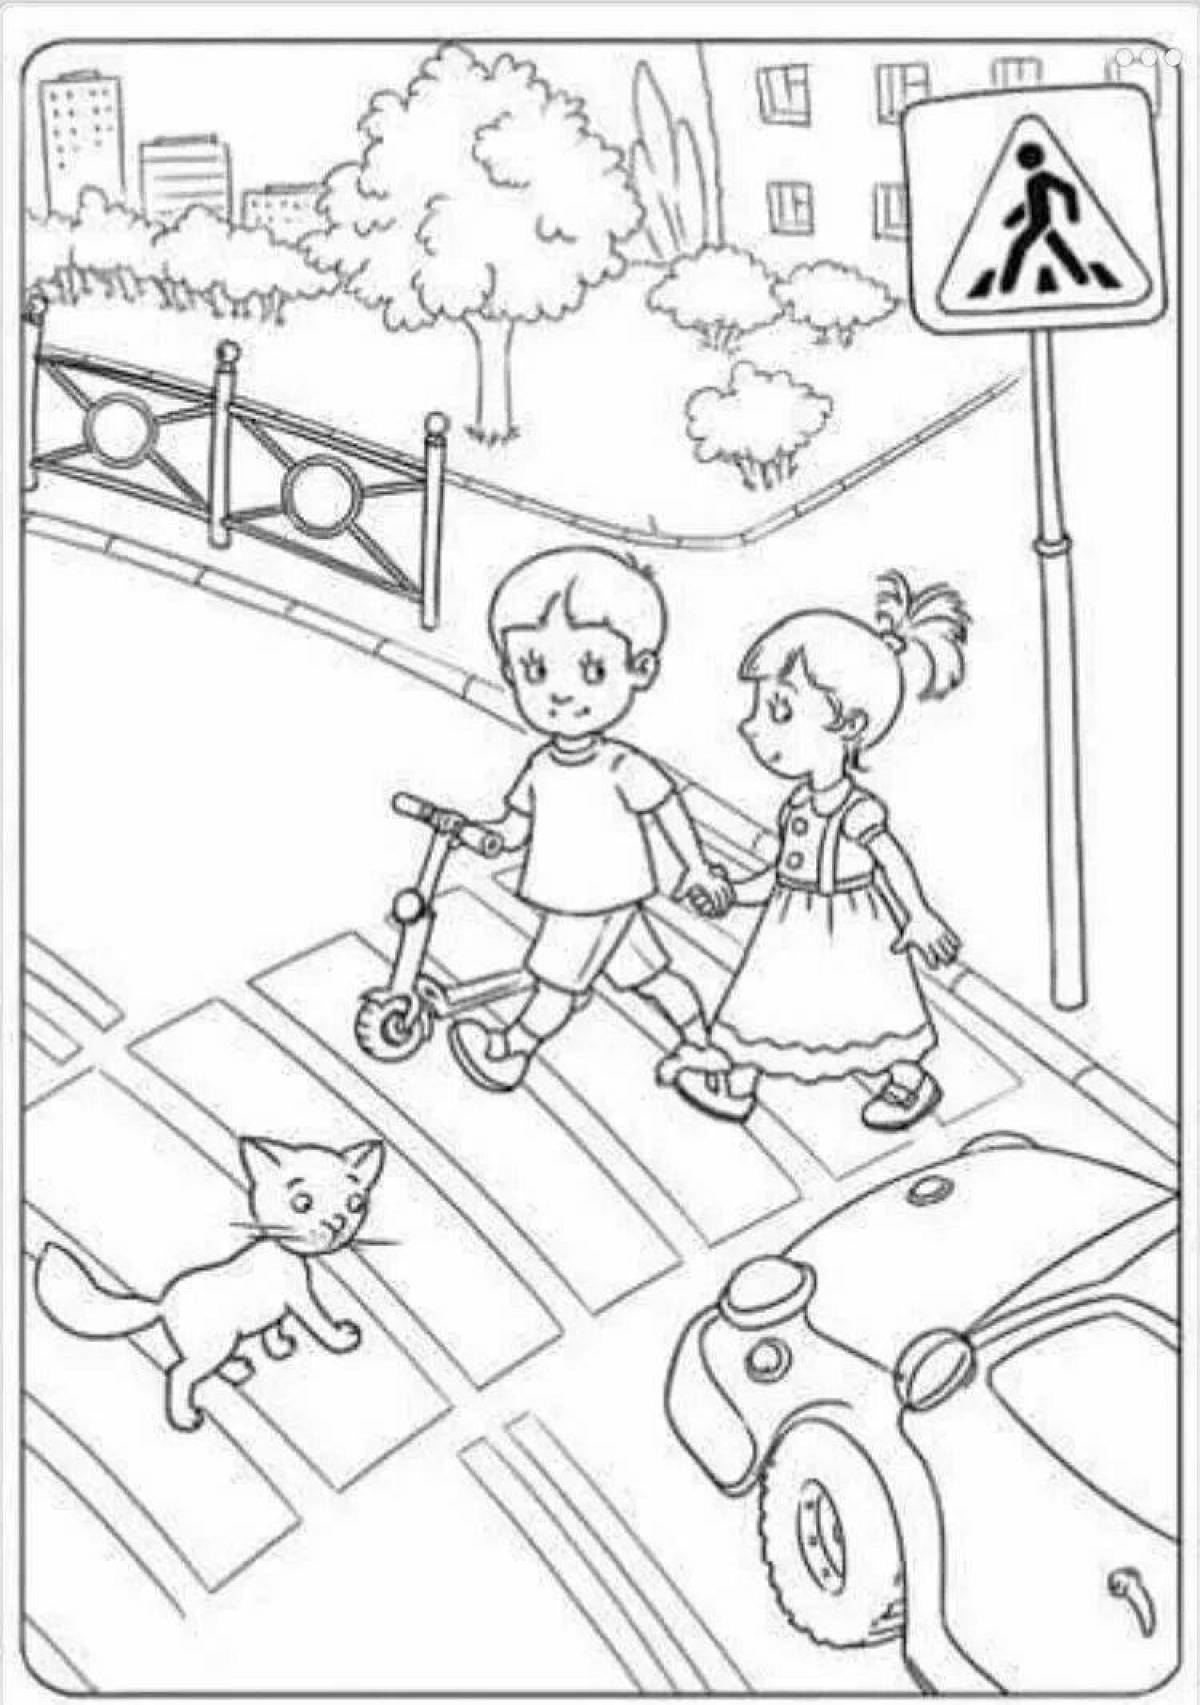 Joyful rules of the road 1st grade coloring book